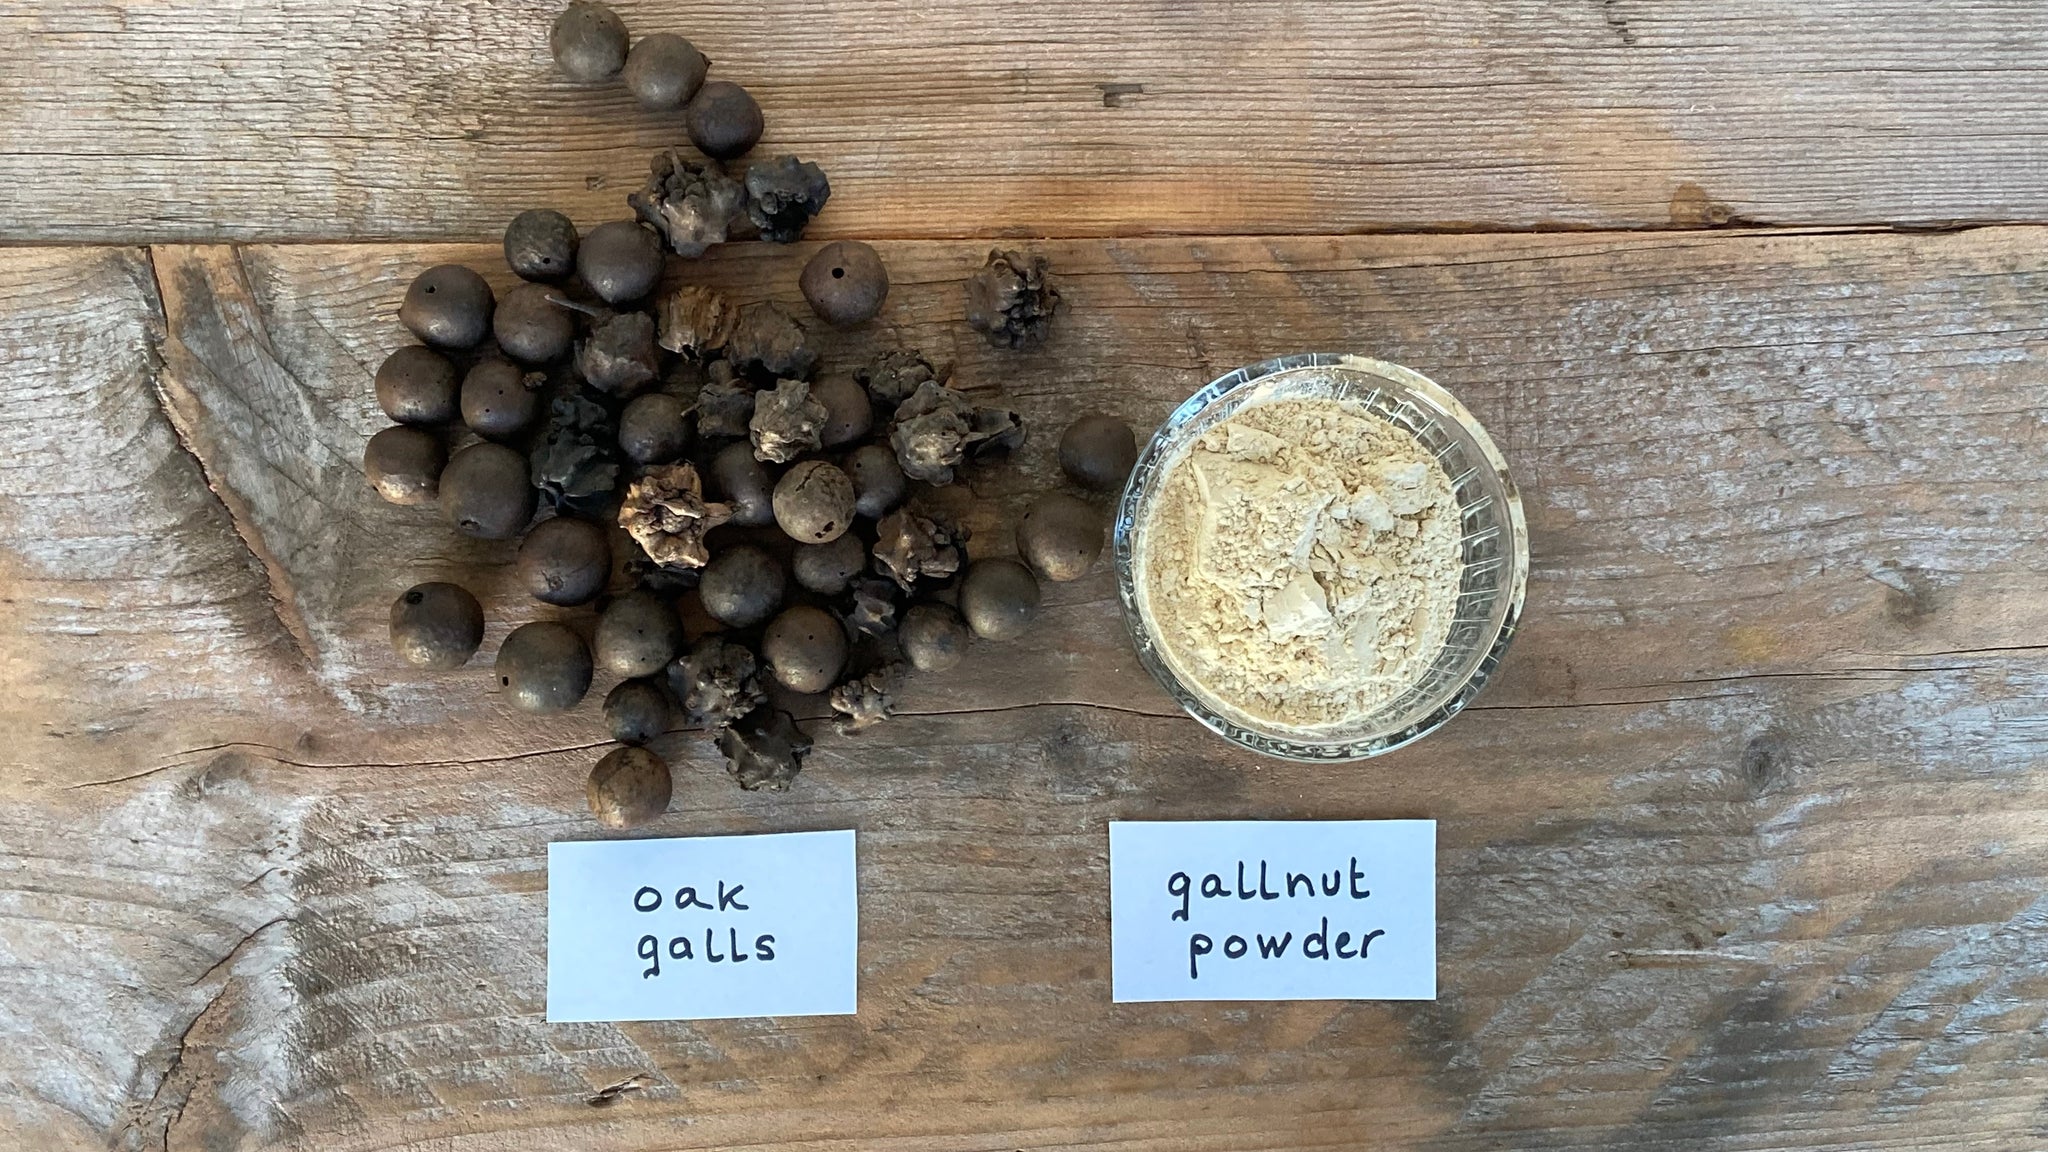 Oak galls and gallnut extract powder